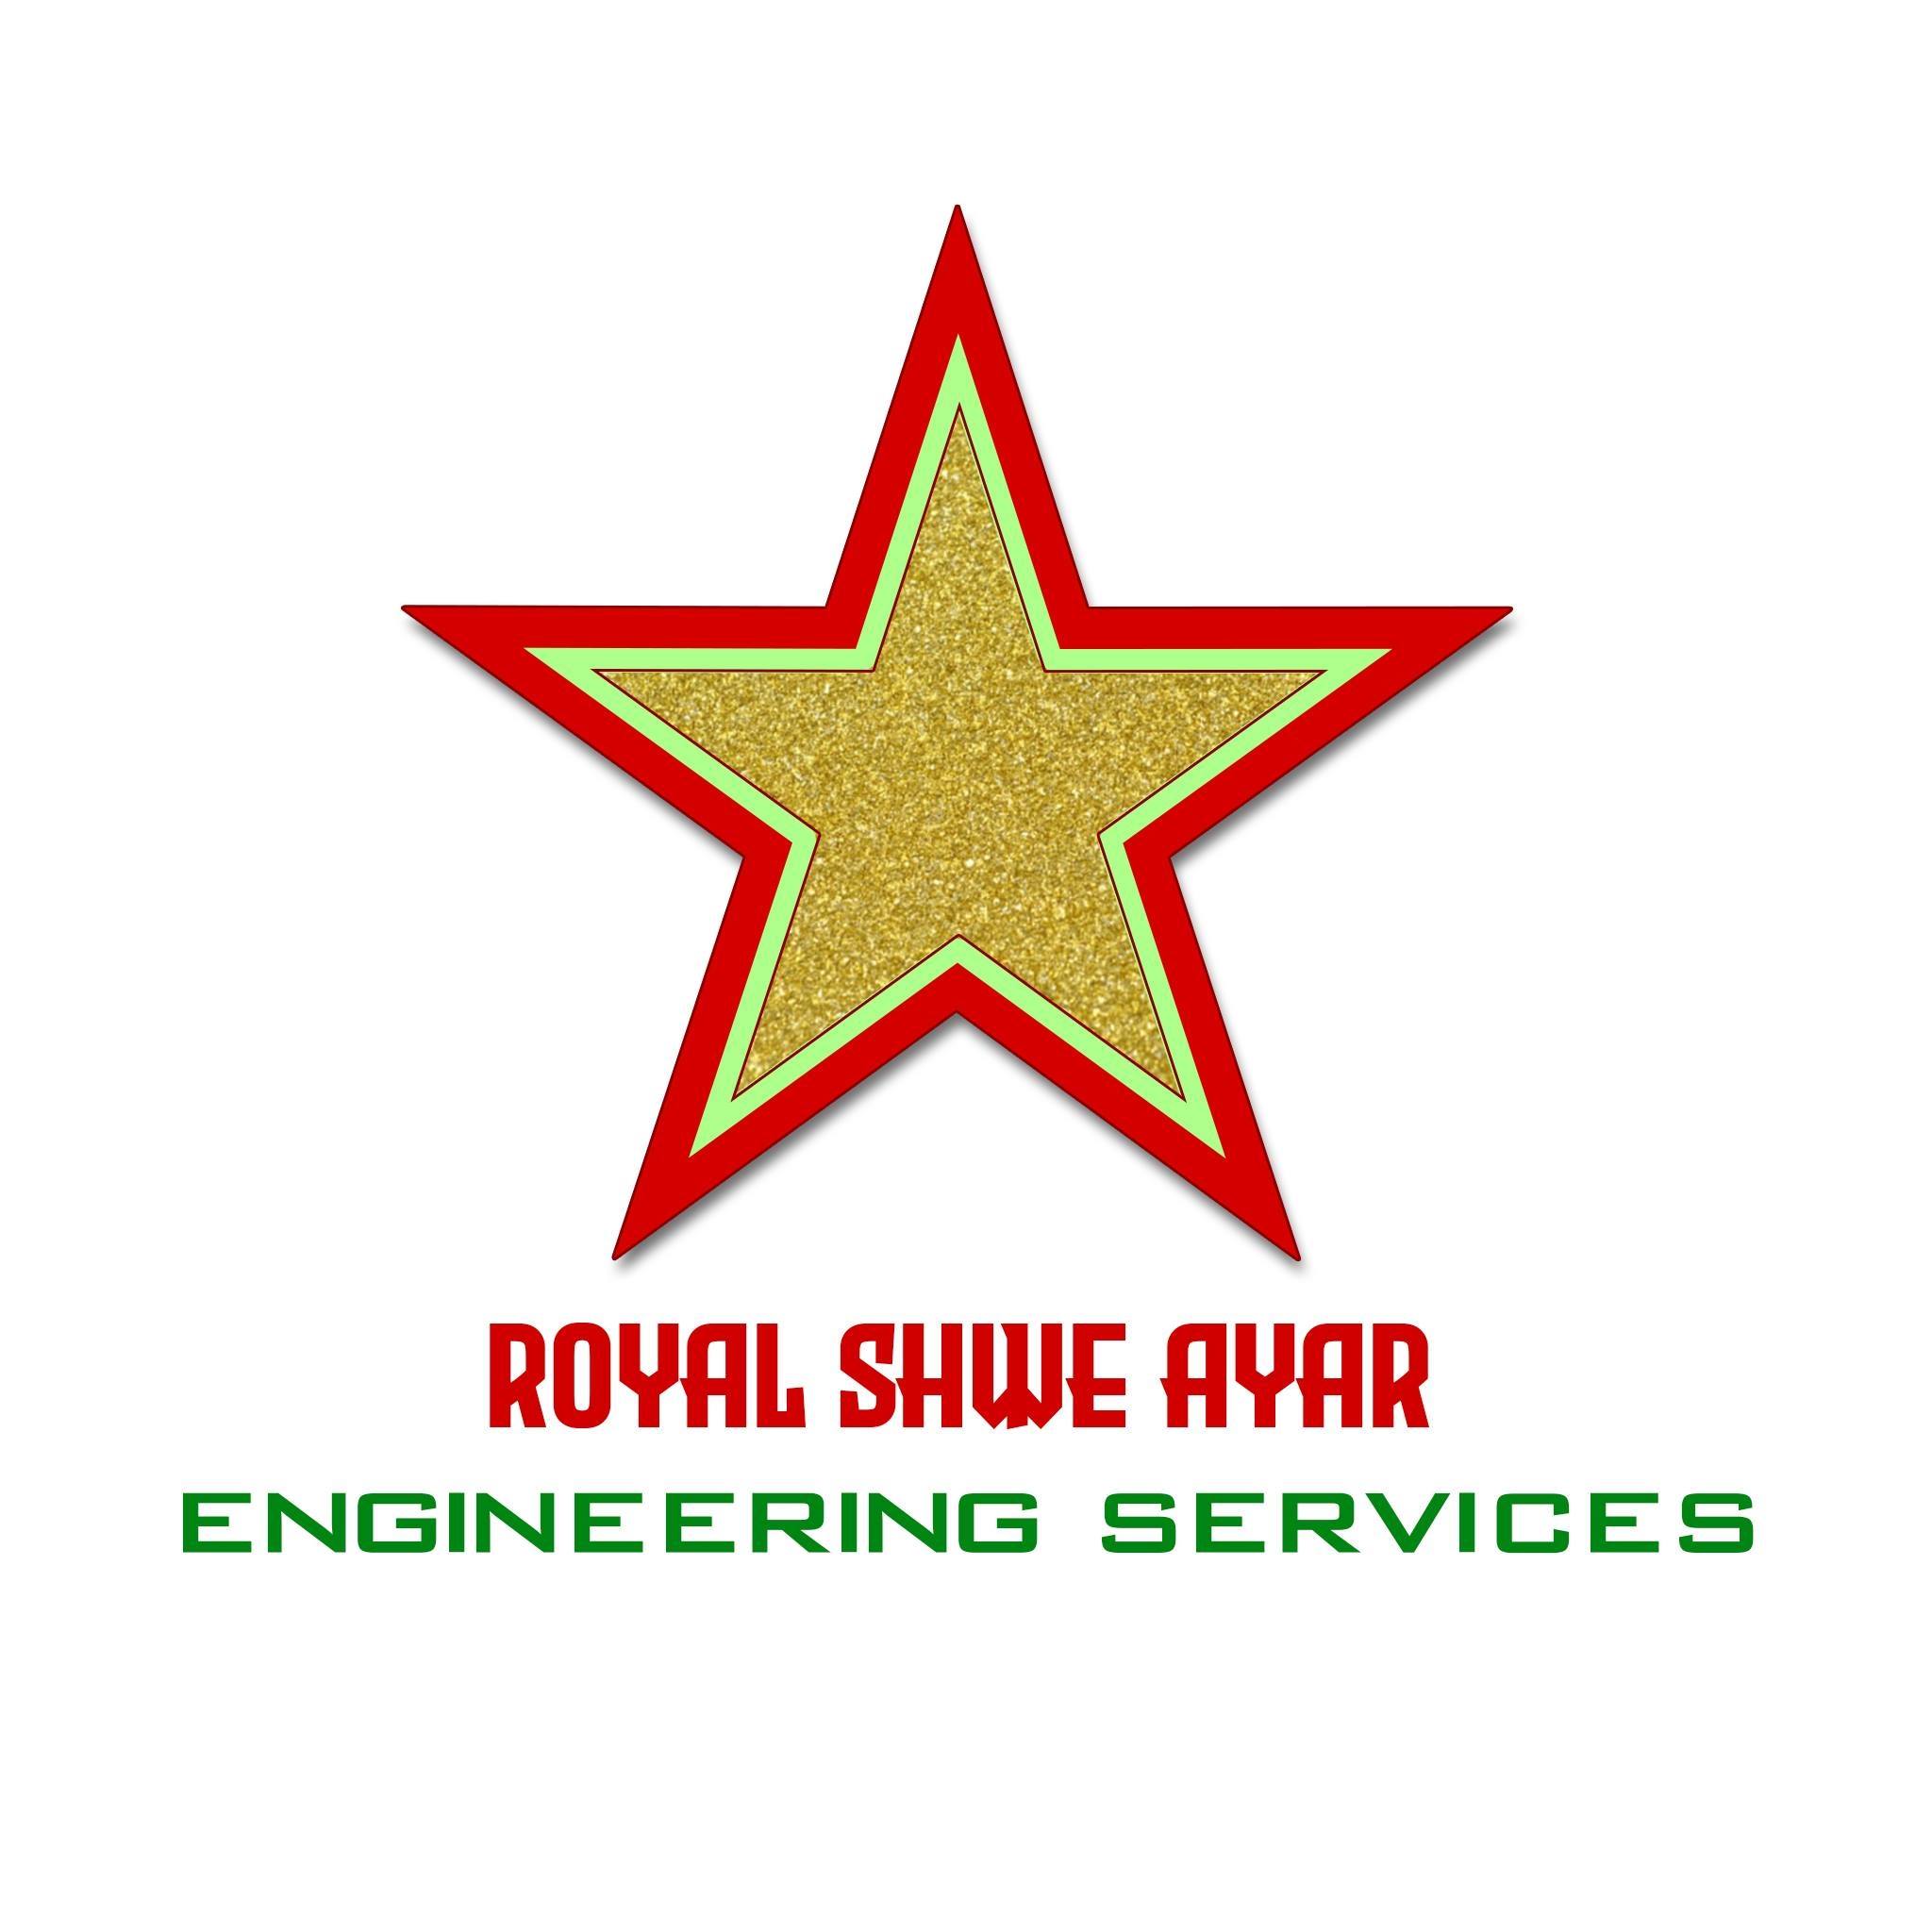 Royal Shwe Ayar Engineering Services